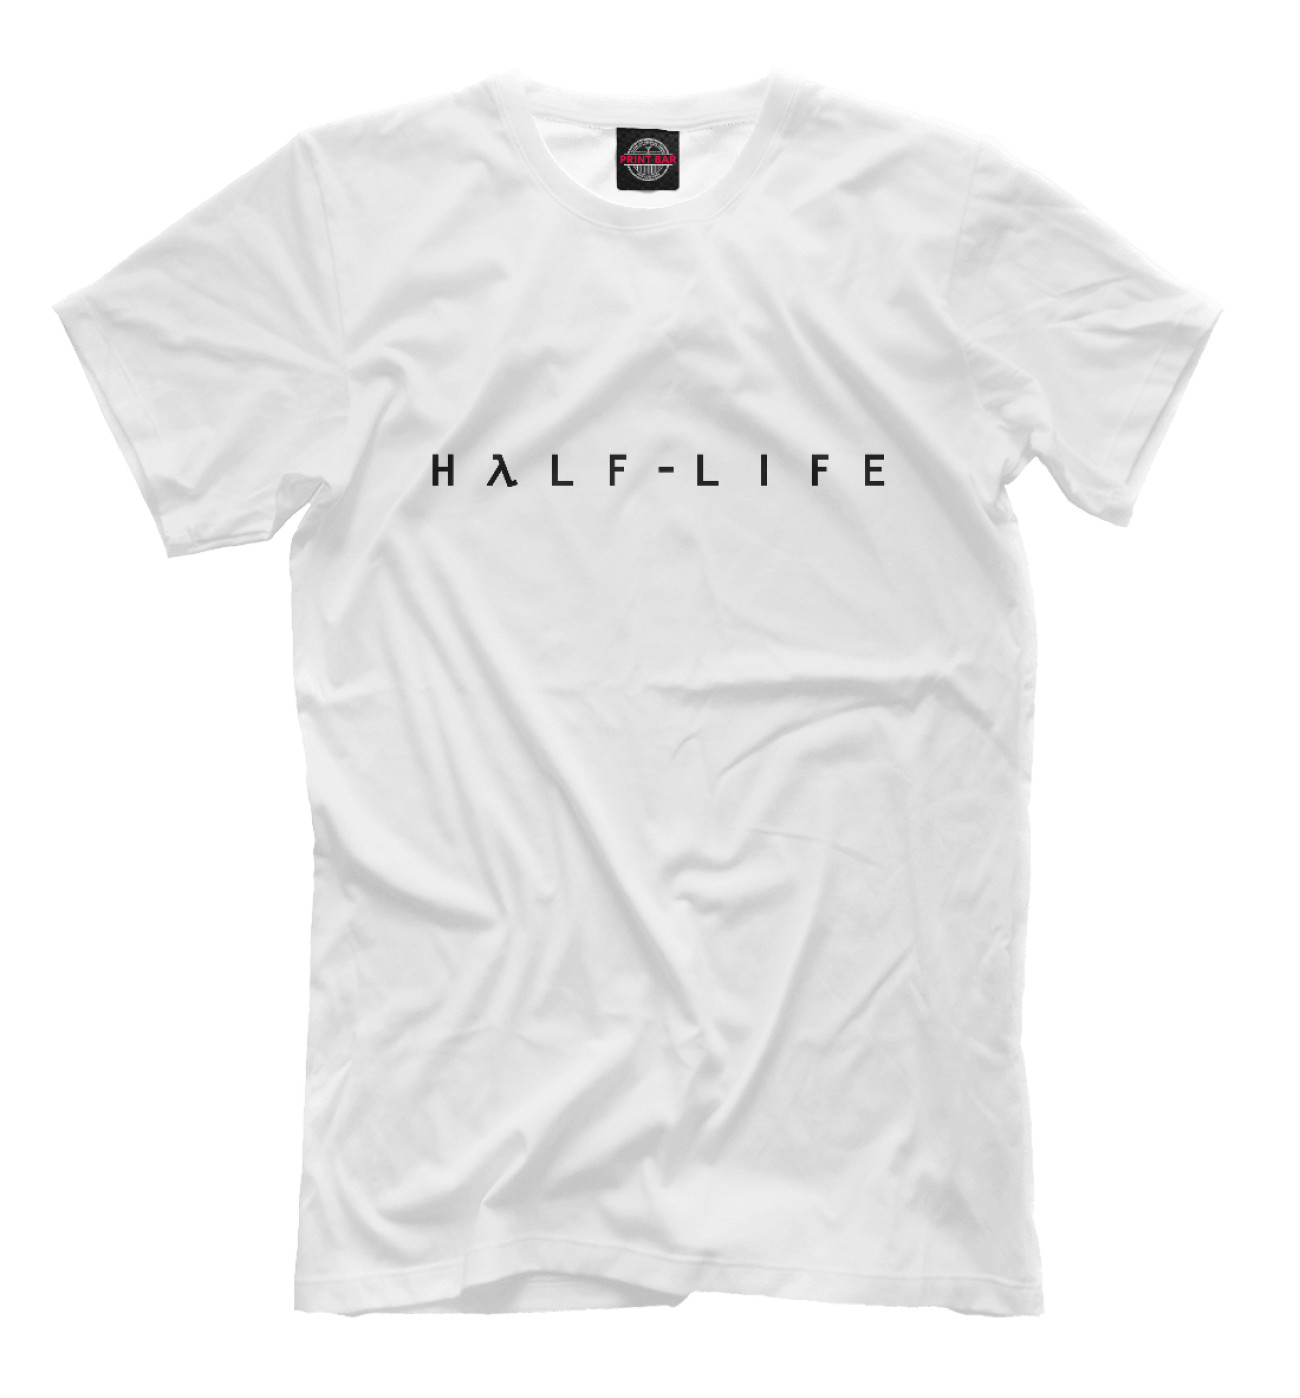 Мужская Футболка Half Life, артикул: HLF-778575-fut-2